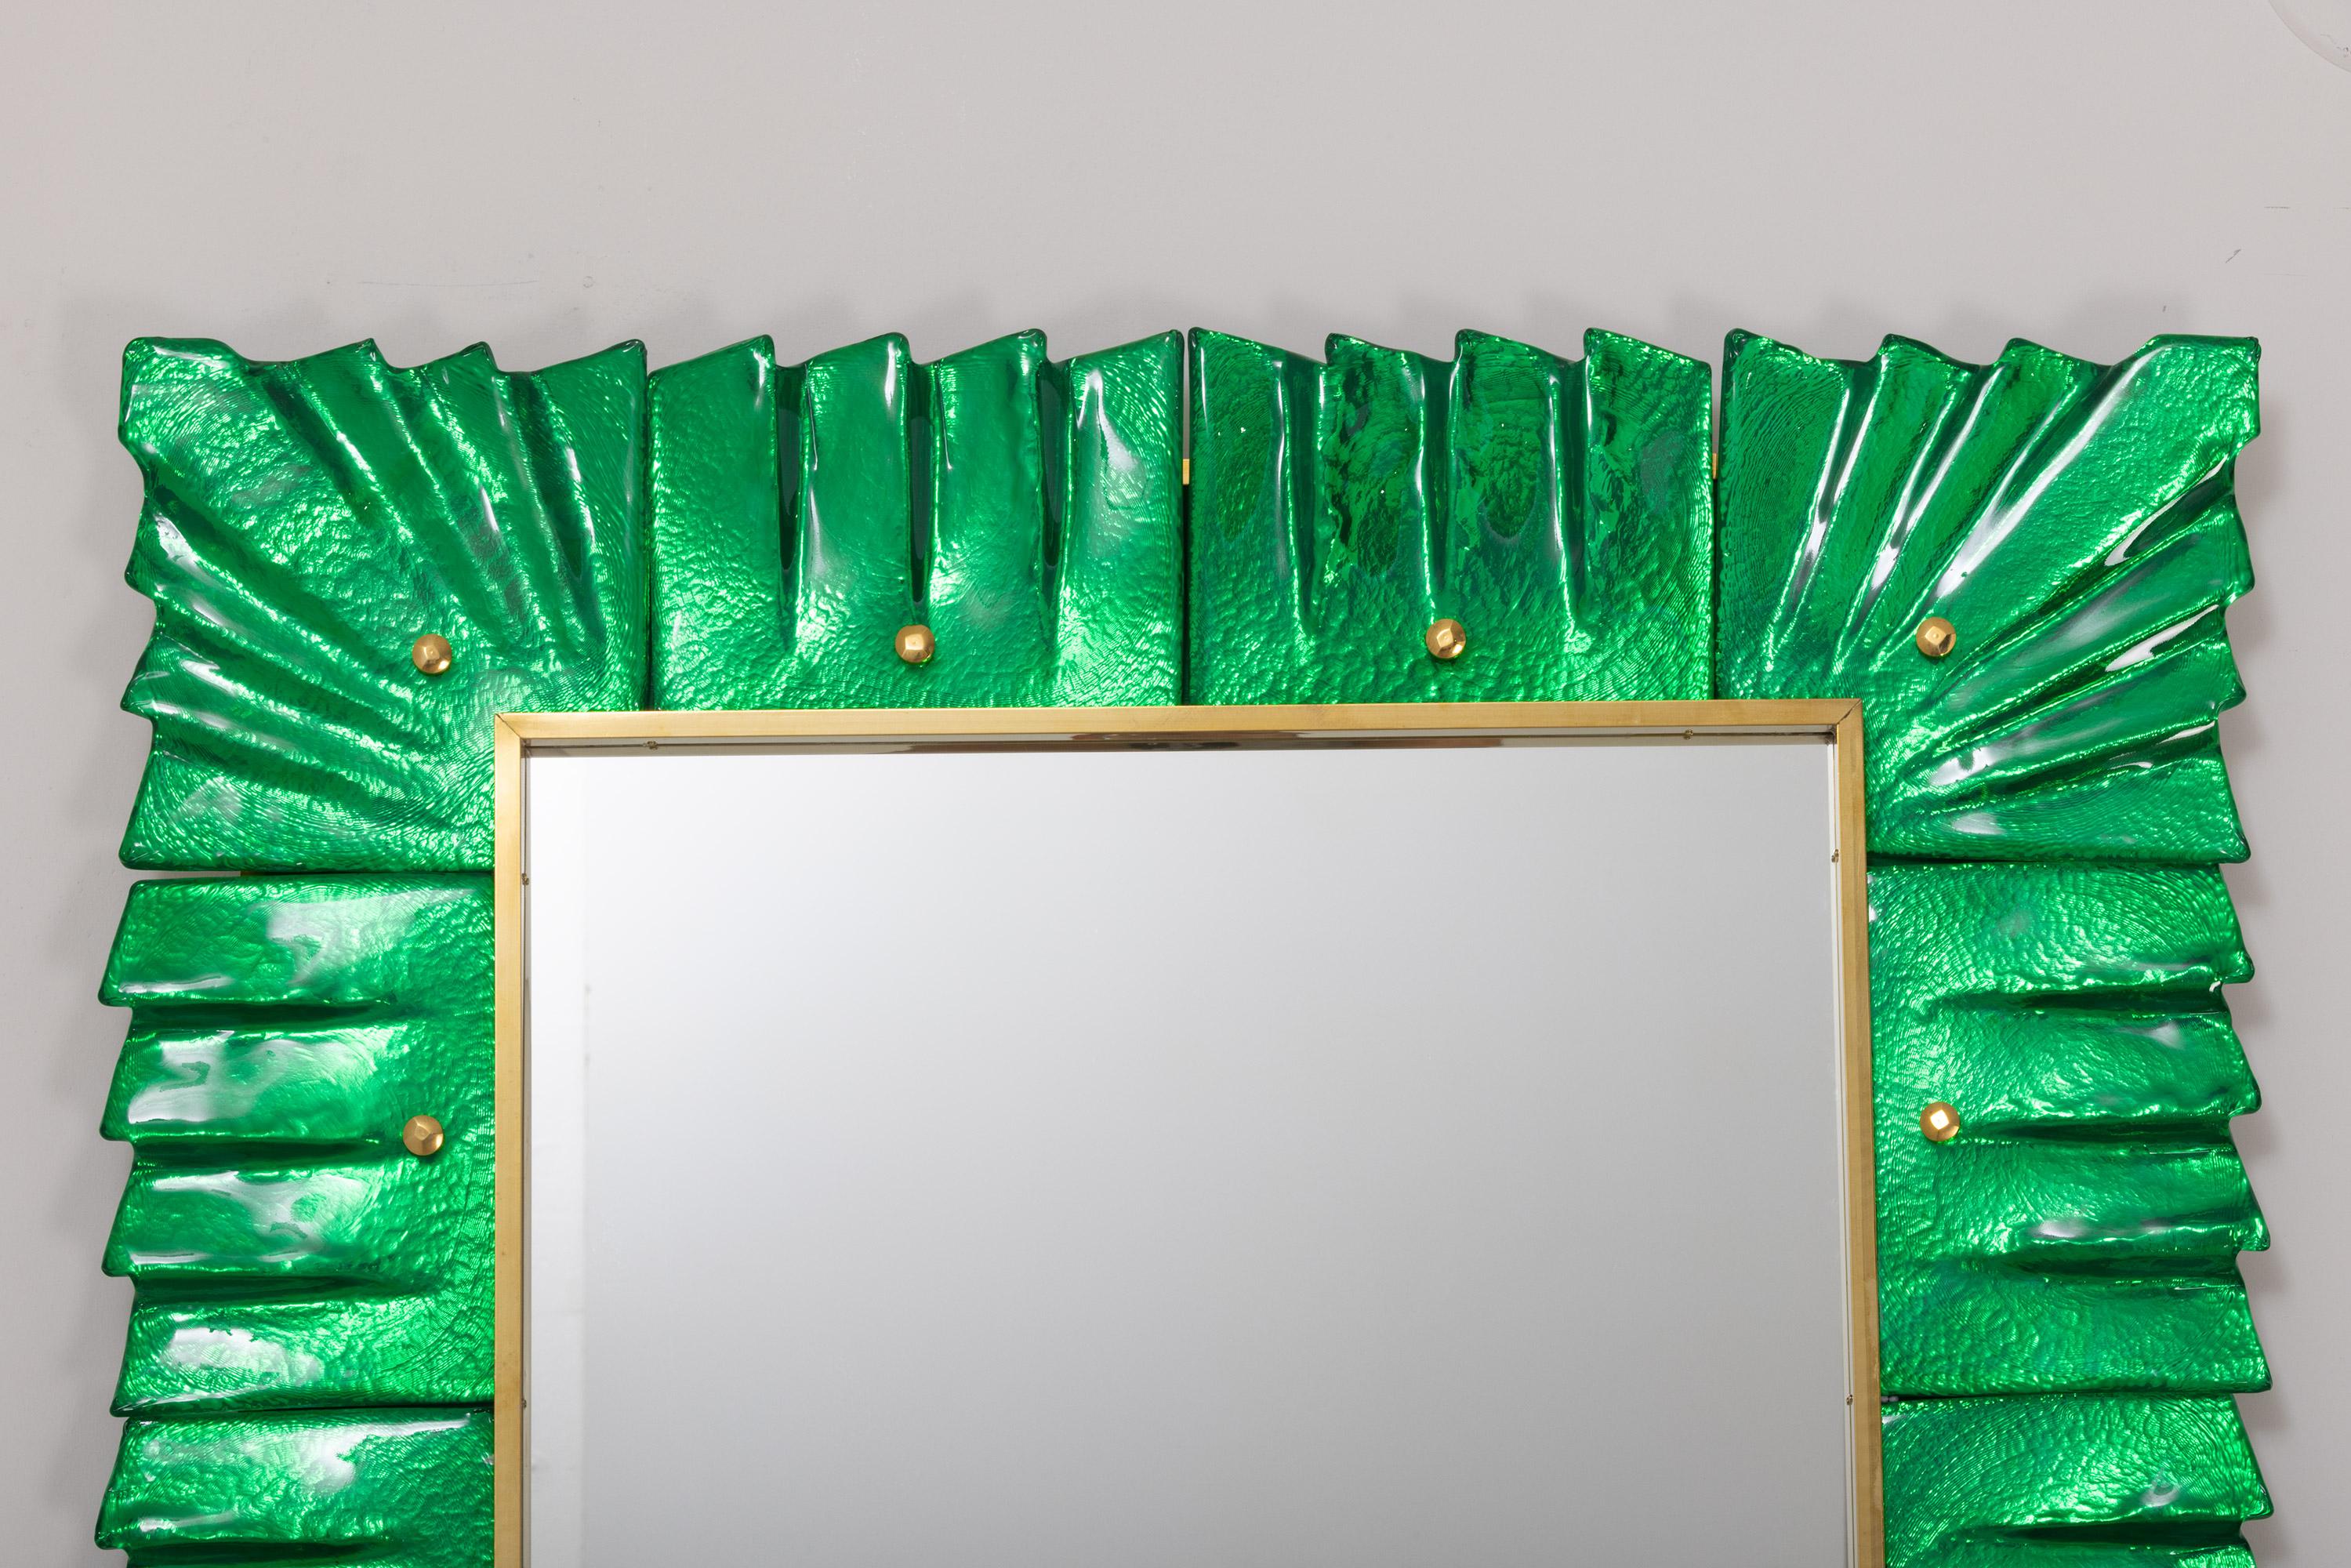 italien Paire de miroirs rectangulaires encadrés en verre de Murano vert émeraude, en stock en vente